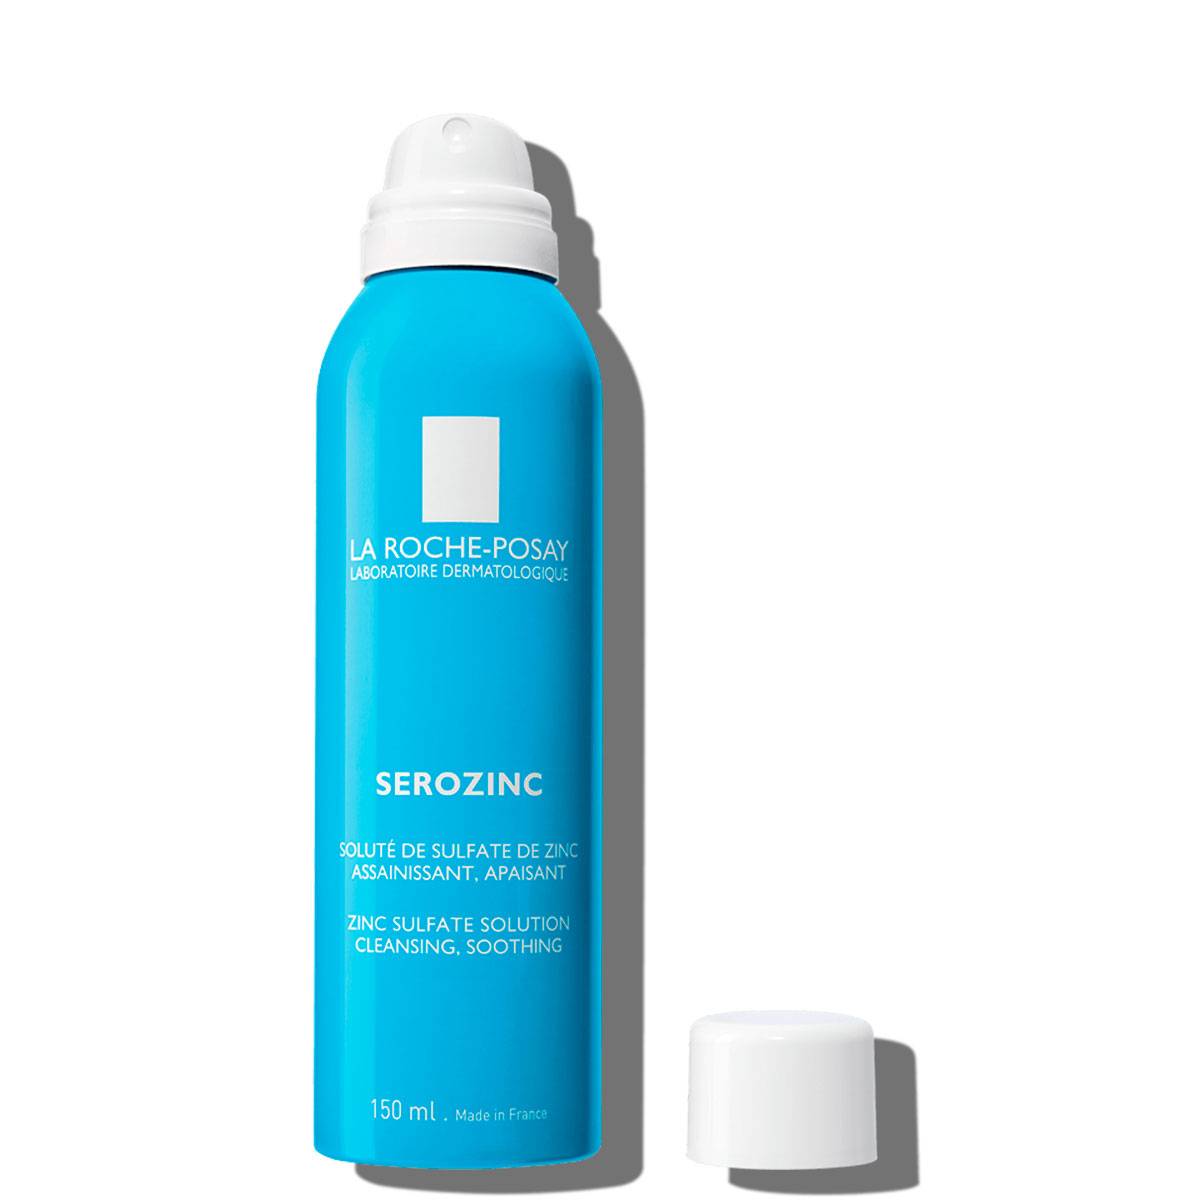 La Roche Posay Serozinc 150ml - Zinc Sulfate Cleansing Soothing Spray